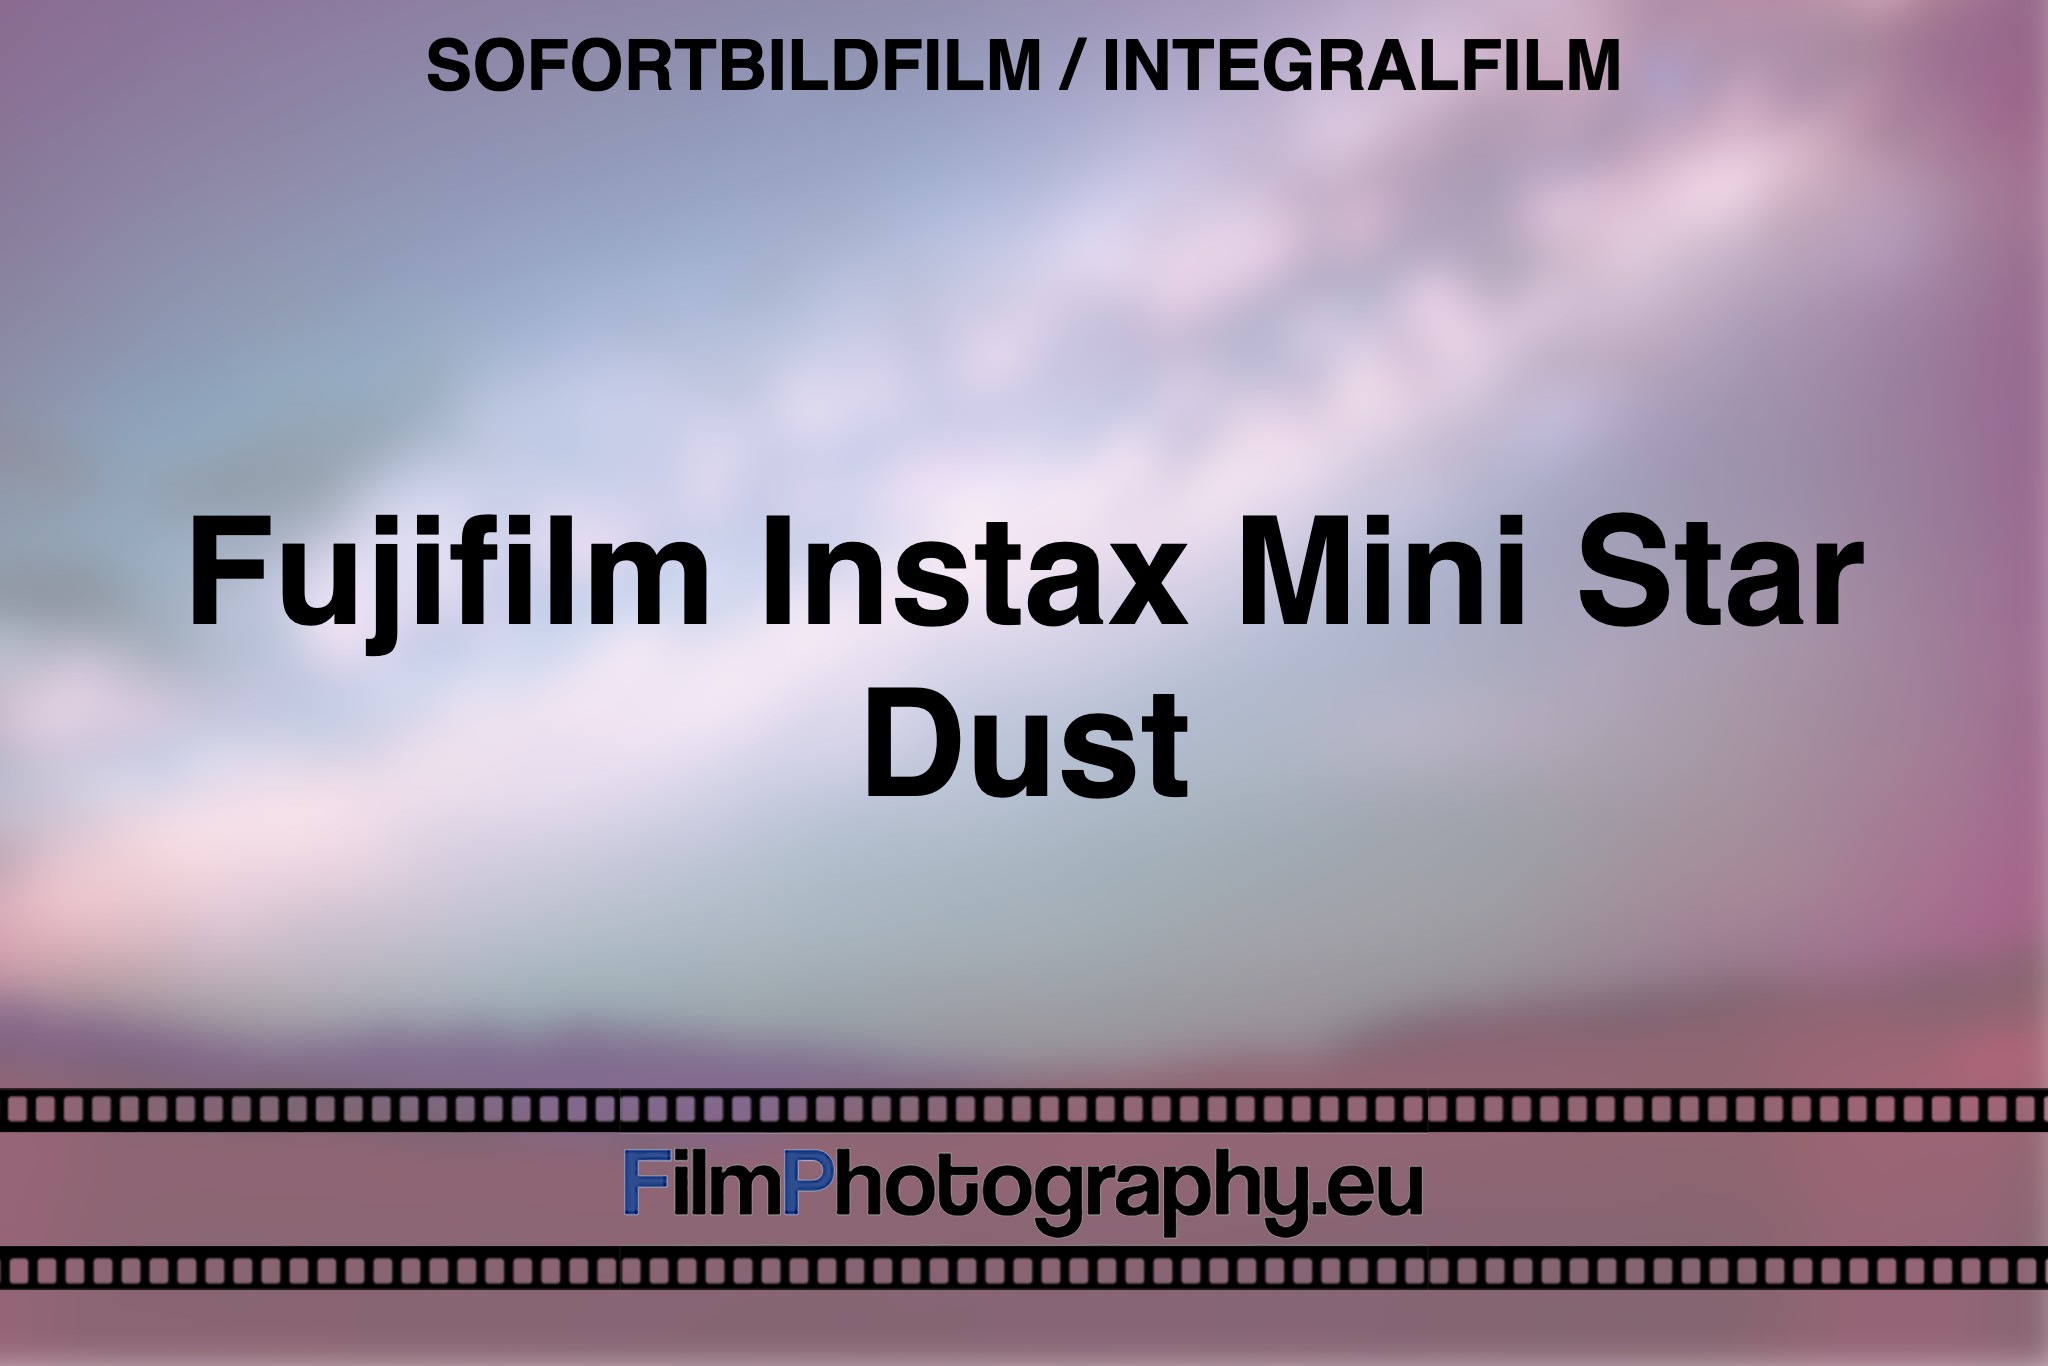 fujifilm-instax-mini-star-dust-sofortbildfilm-integralfilm-fp-bnv